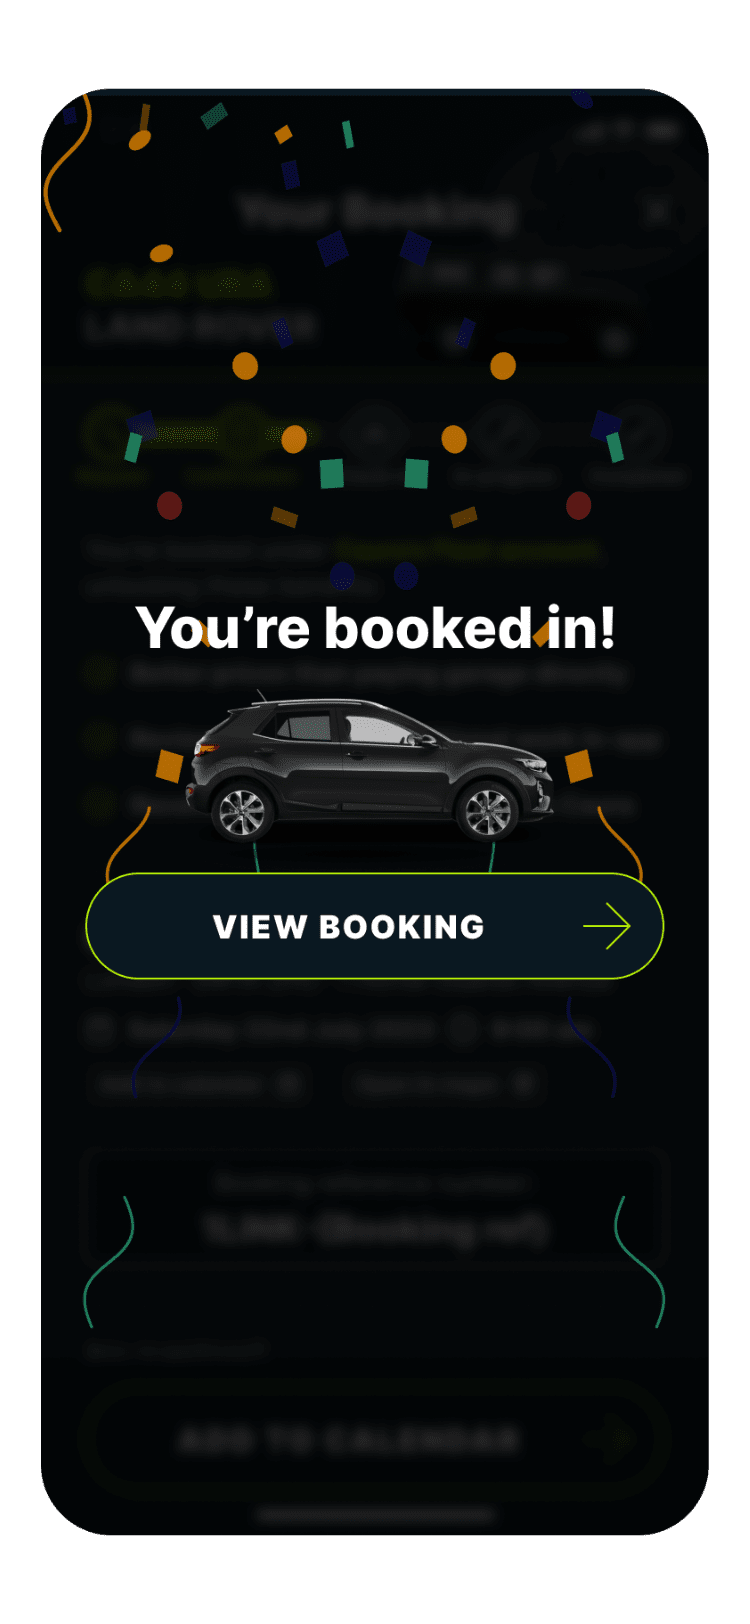 Kia garage booking confirmed in the Caura app